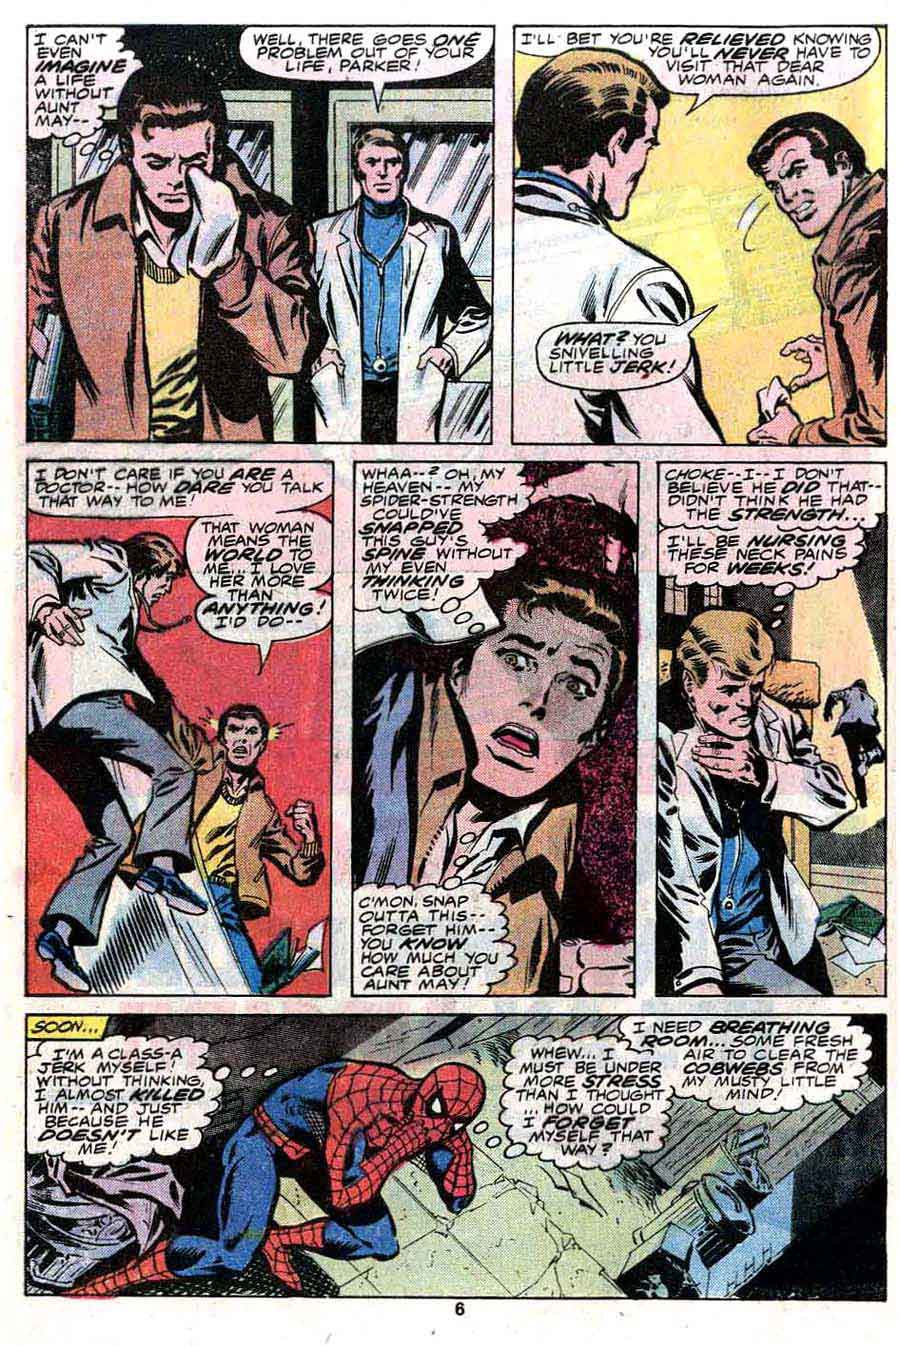 Amazing Spider-Man v1 #189 marvel comic book page art by John Byrne